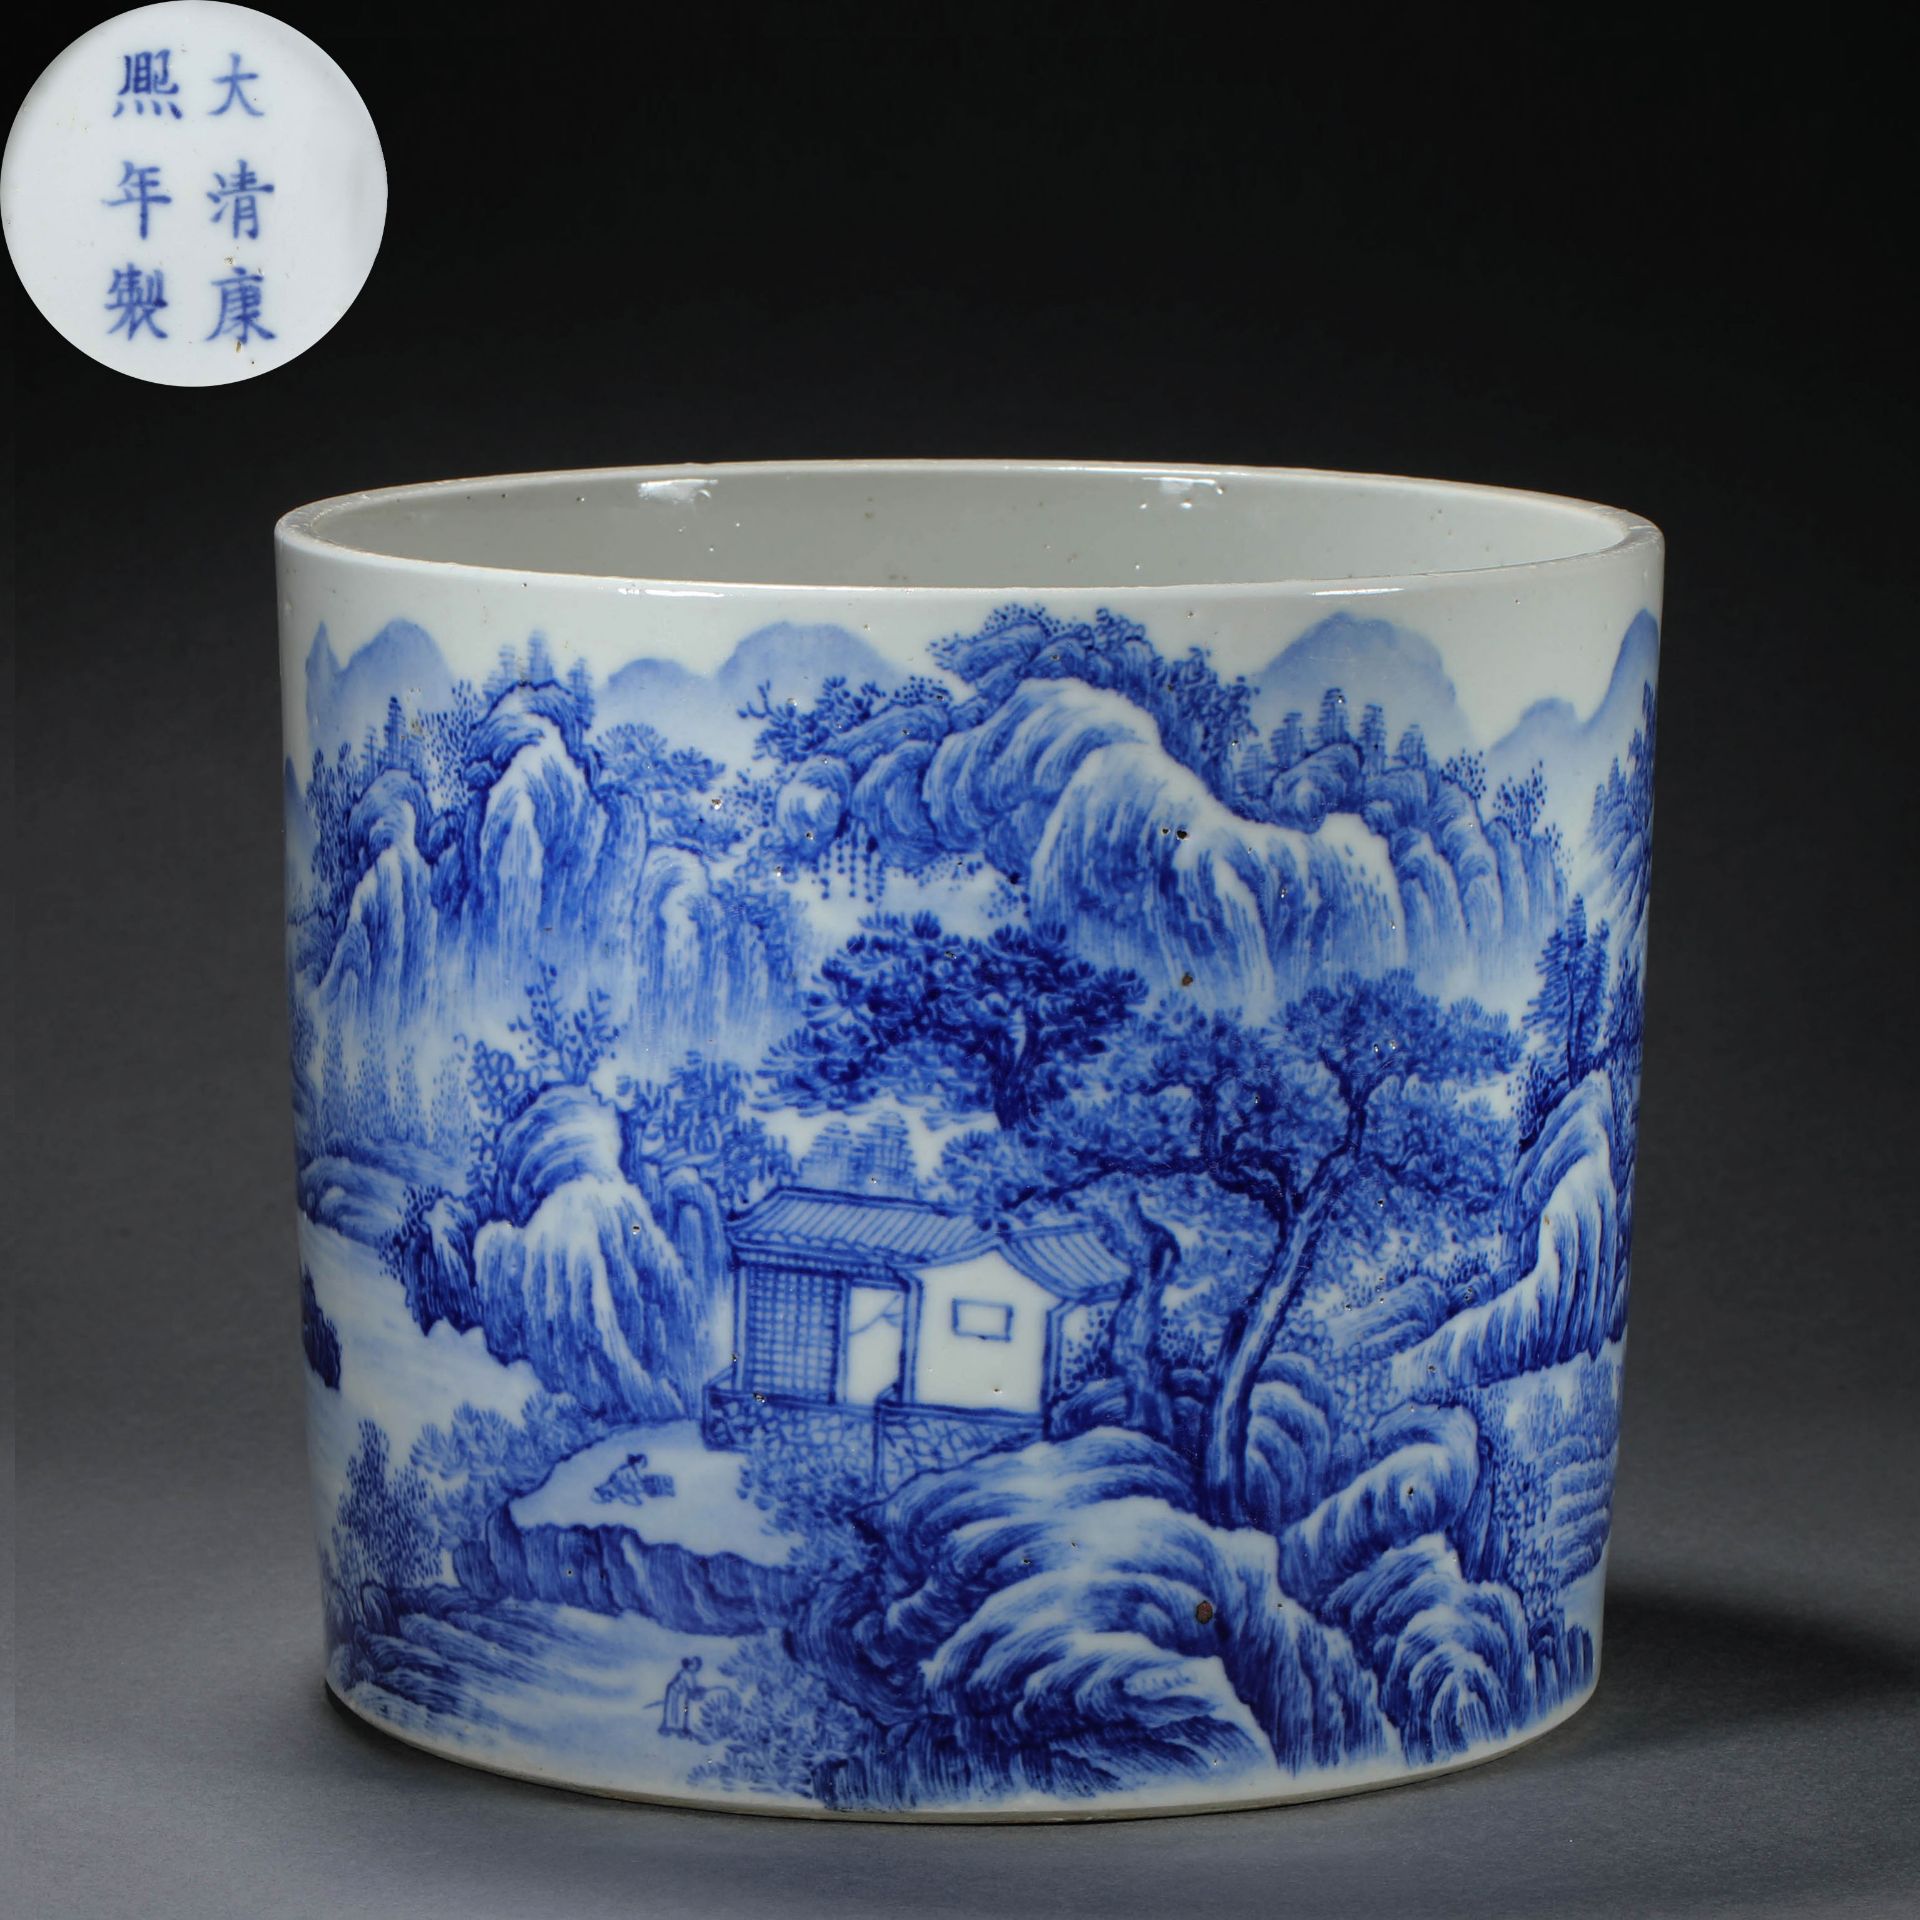 Qing dynasty blue and white landscape pattern pen holder